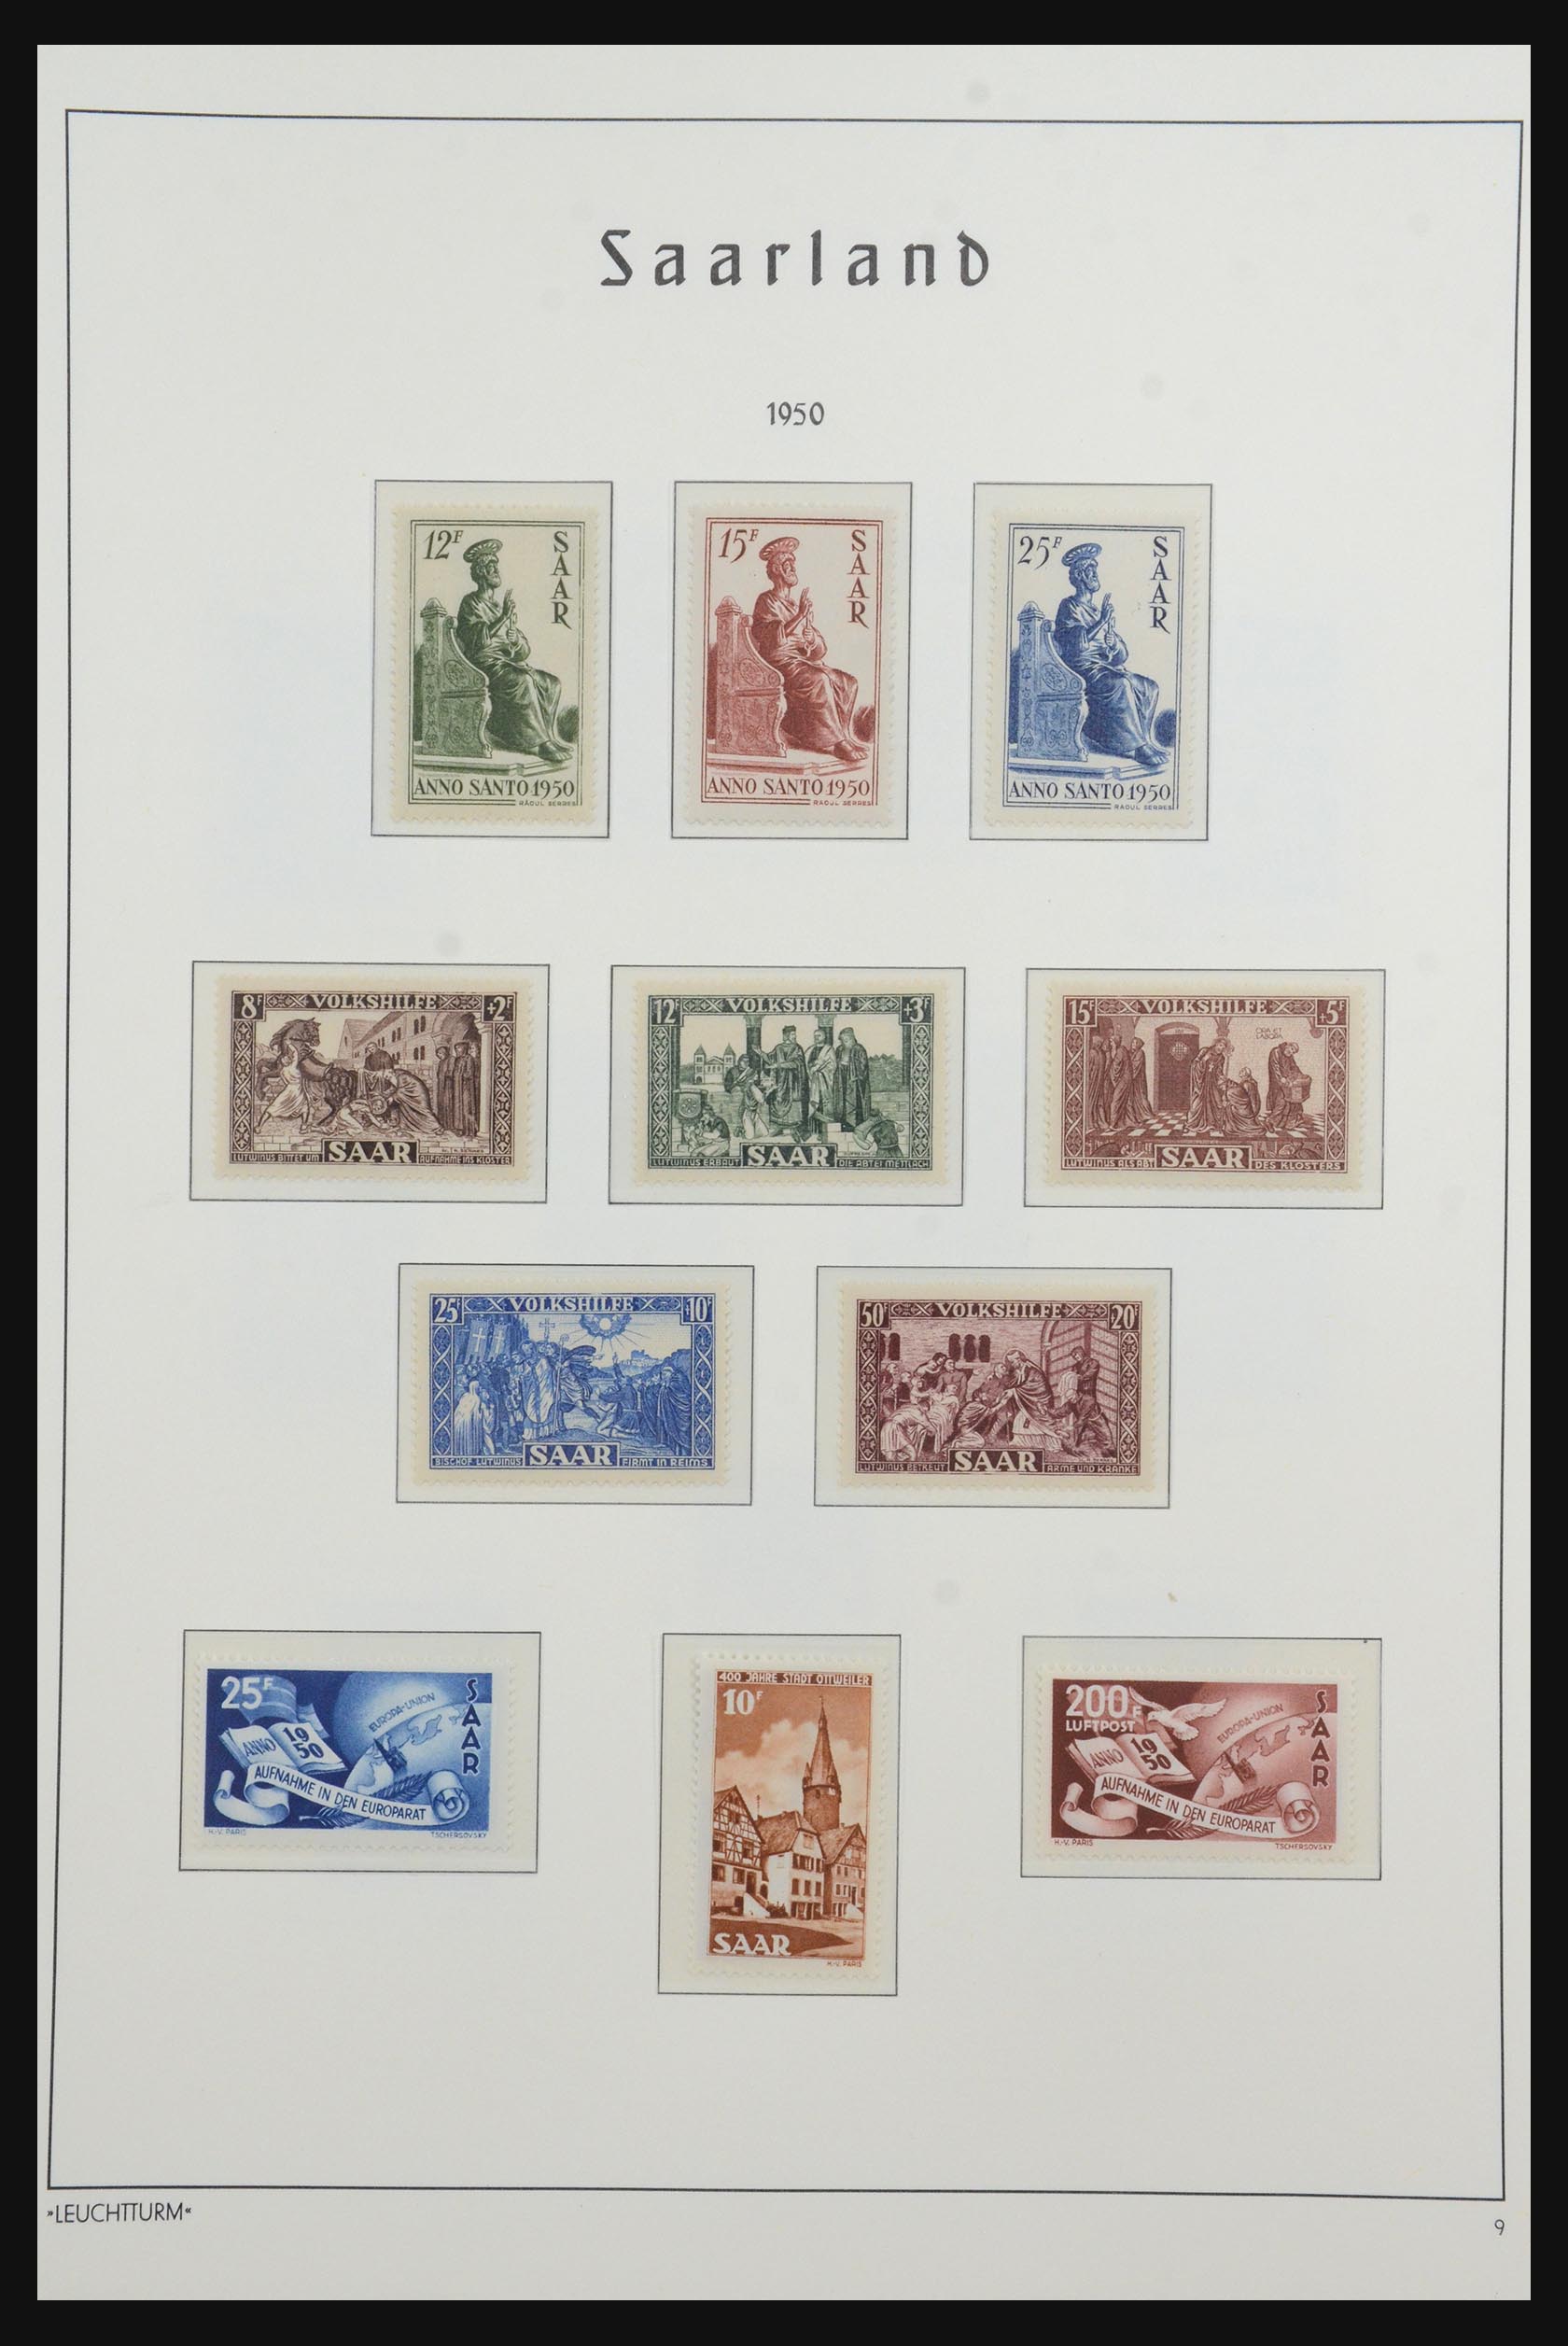 31601 095 - 31601 Bundespost, Berlin and Saar 1948-2008.